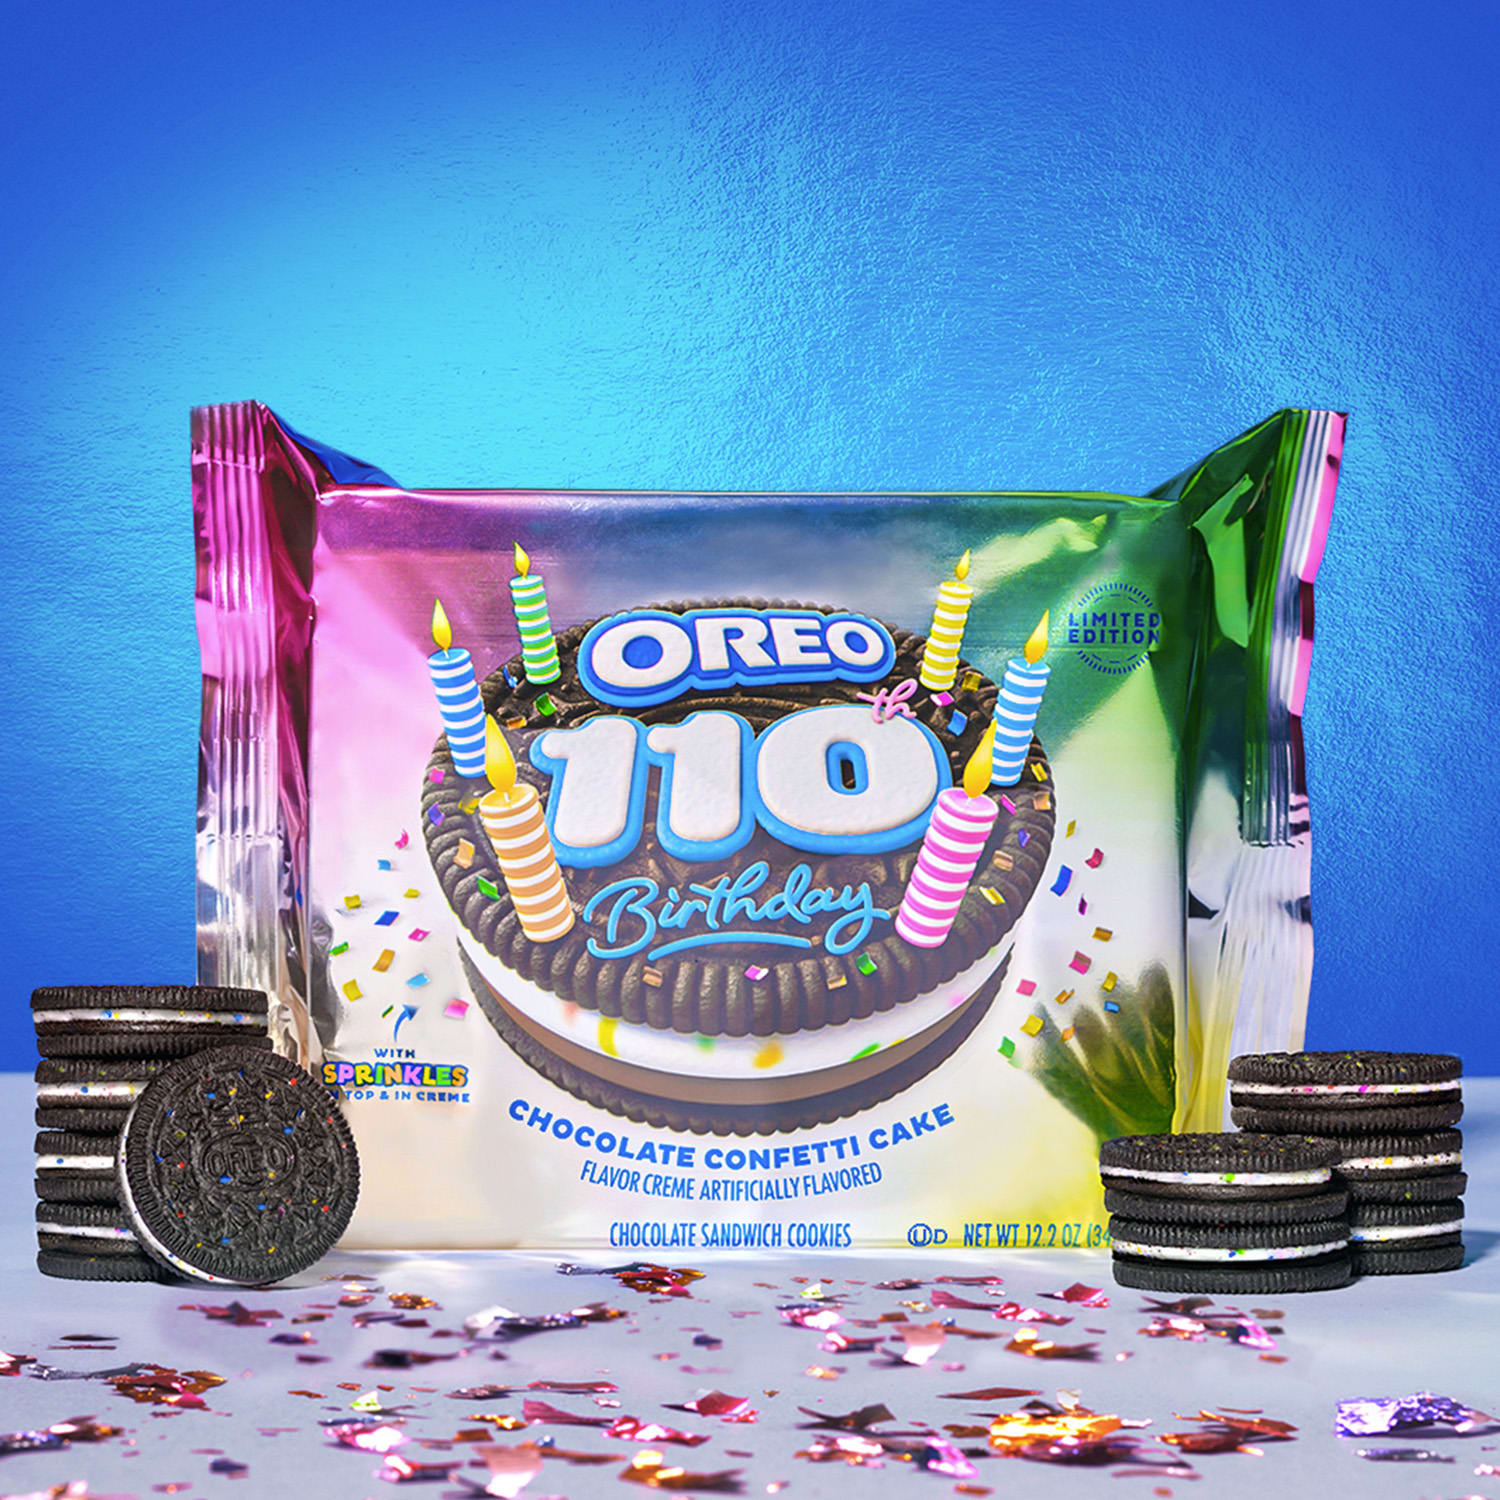 Oreo Releasing Chocolate Confetti Cake Flavor for 110th Birthday